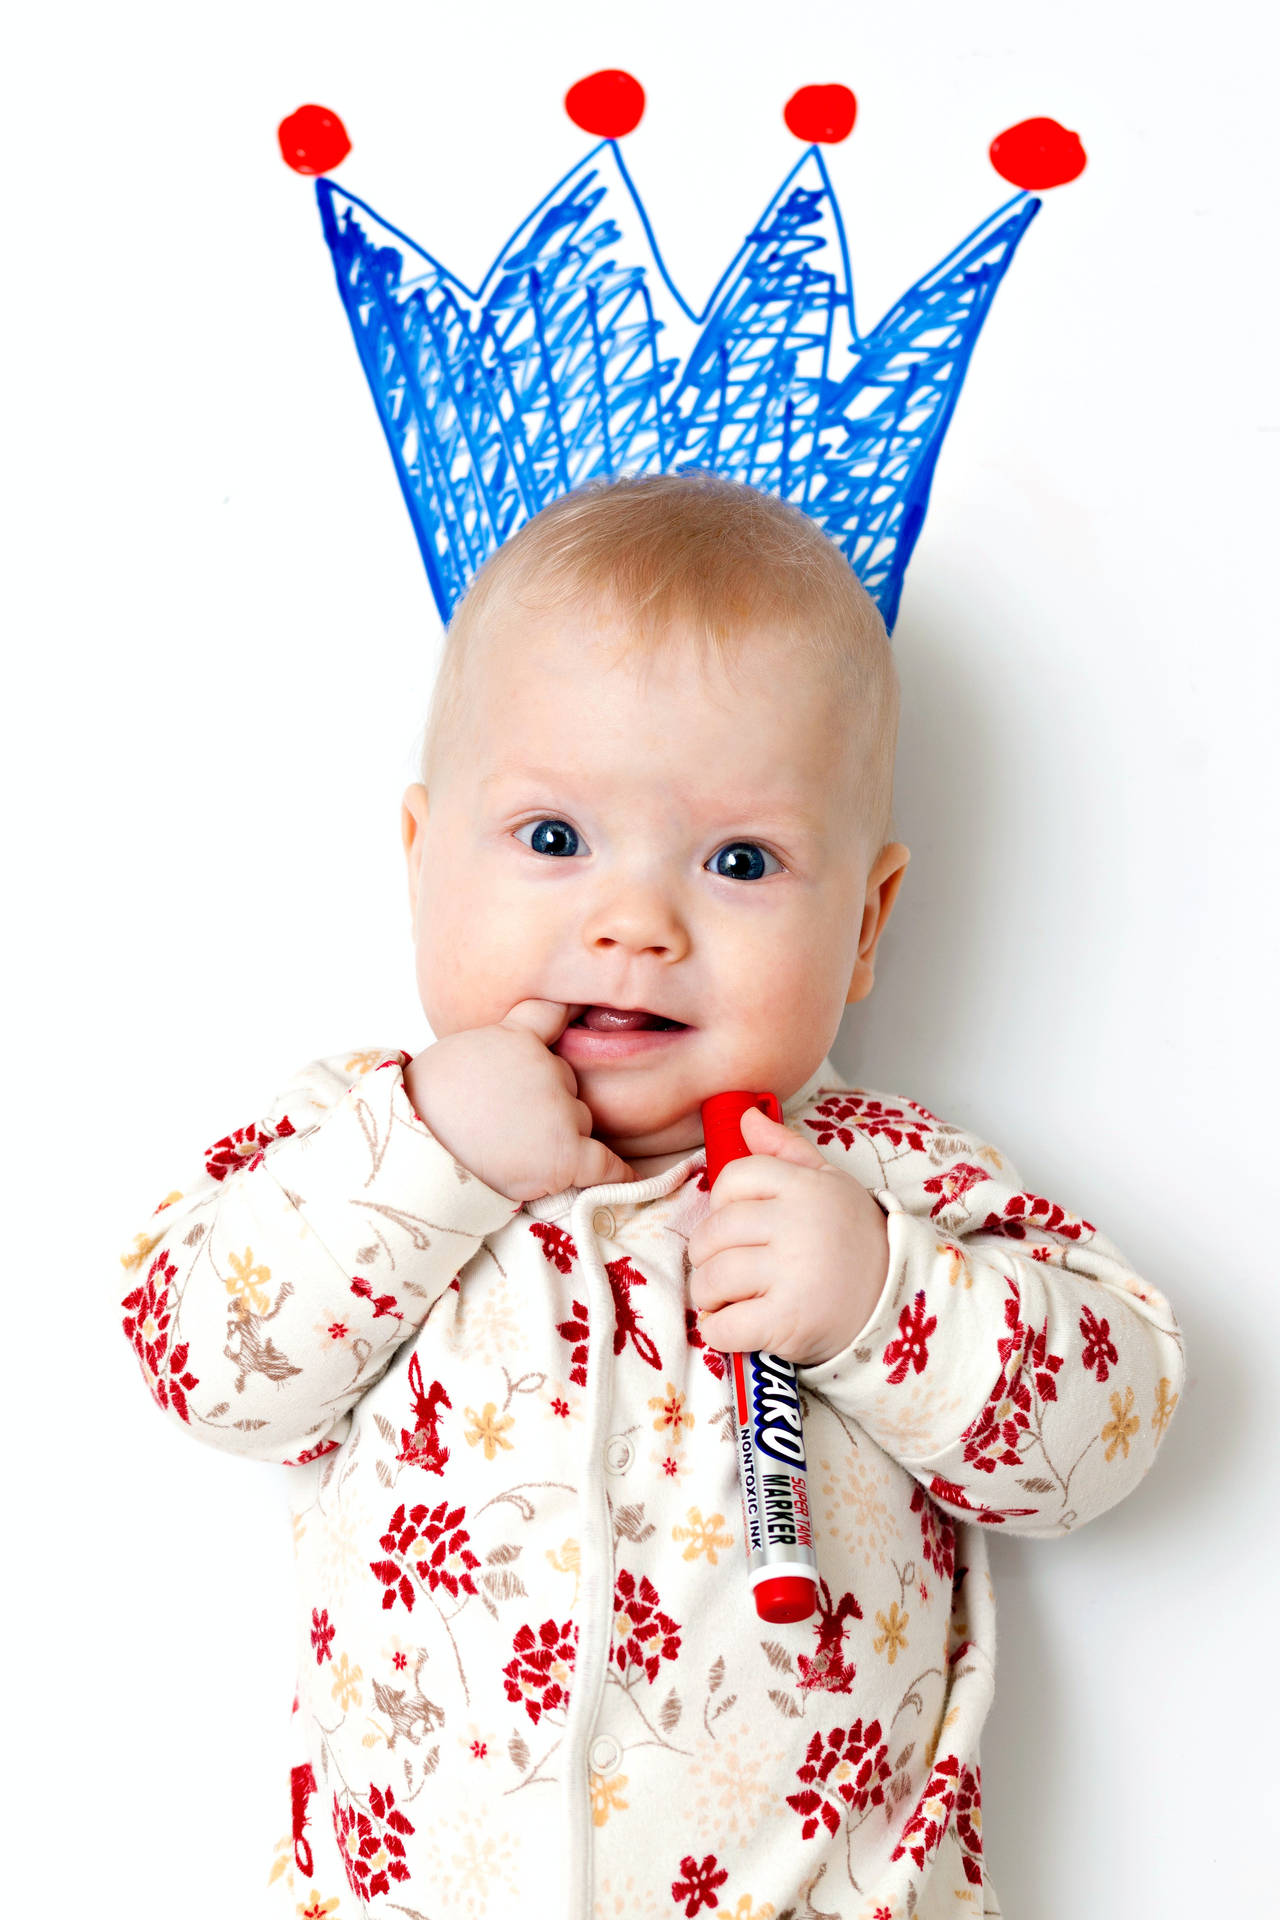 Cute Baby Portrait With Blue Crown Doodle